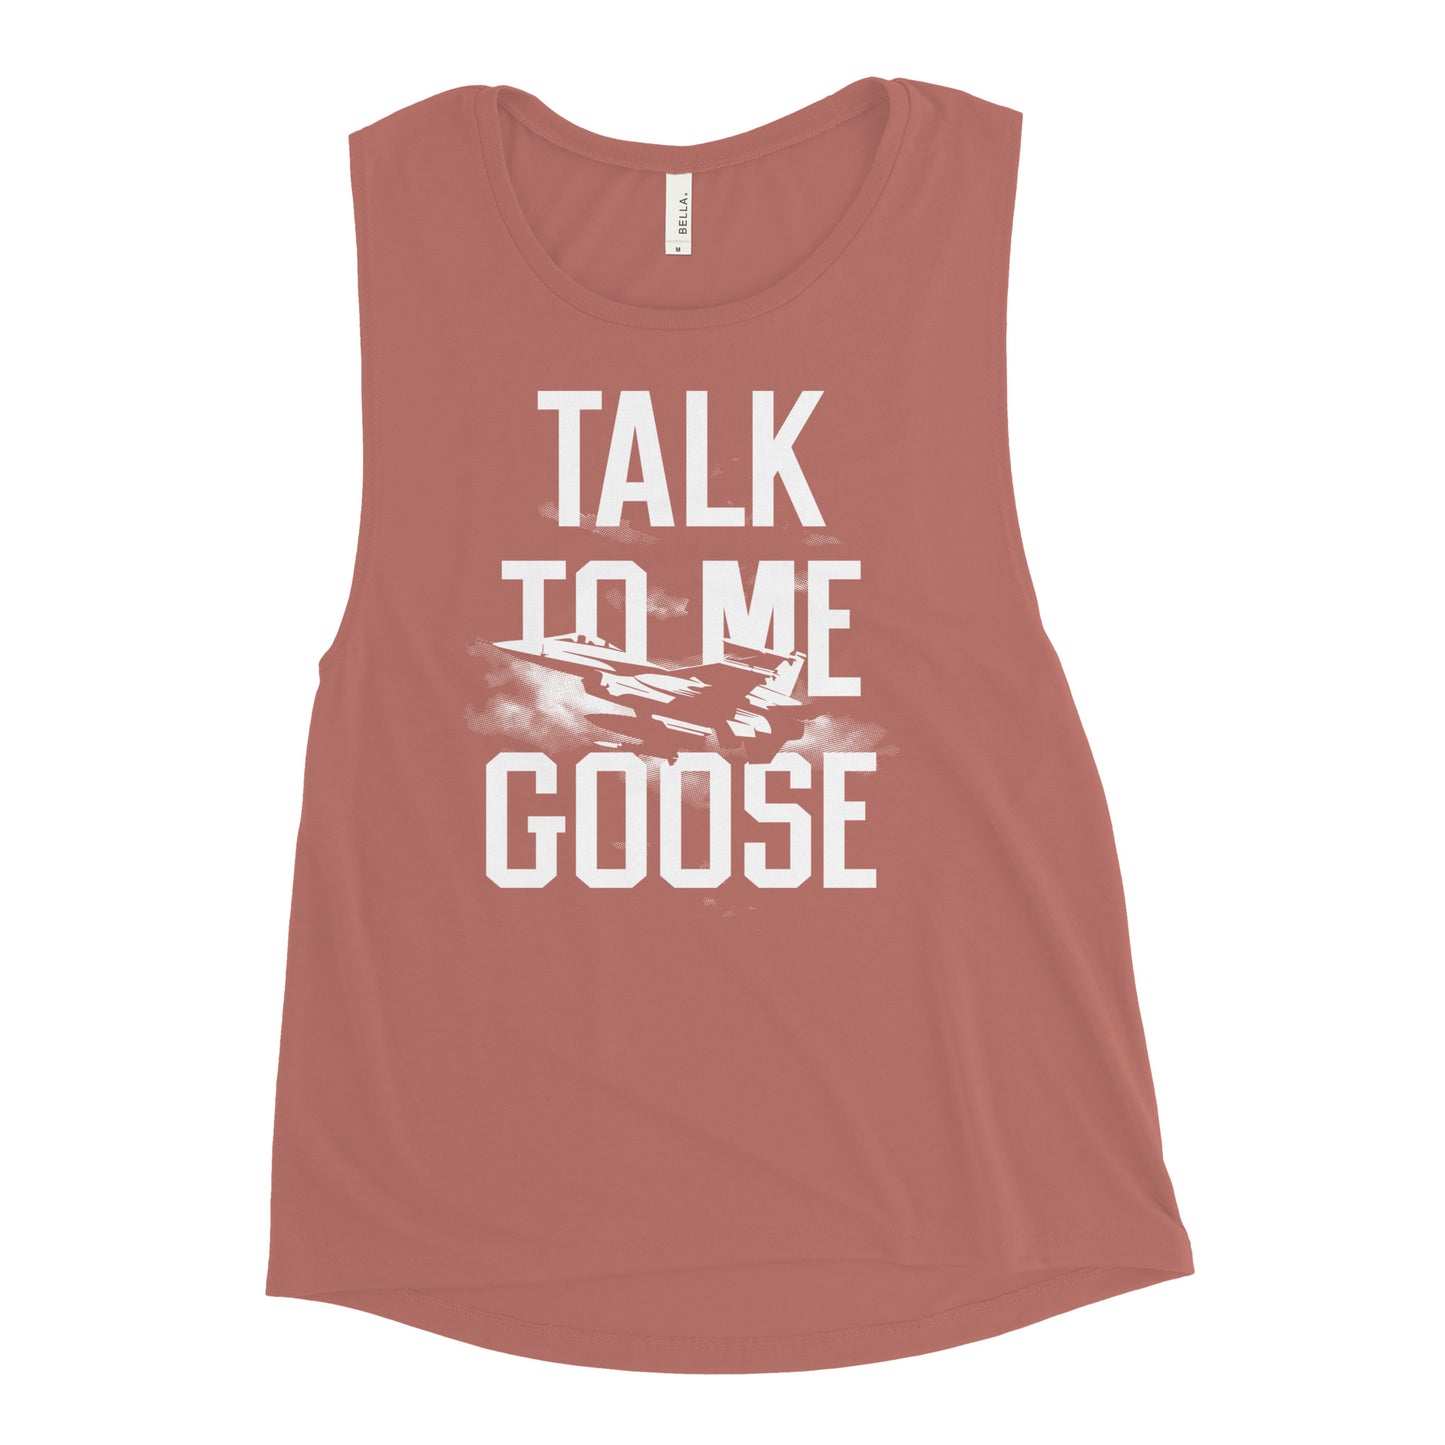 Talk To Me Goose Women's Muscle Tank